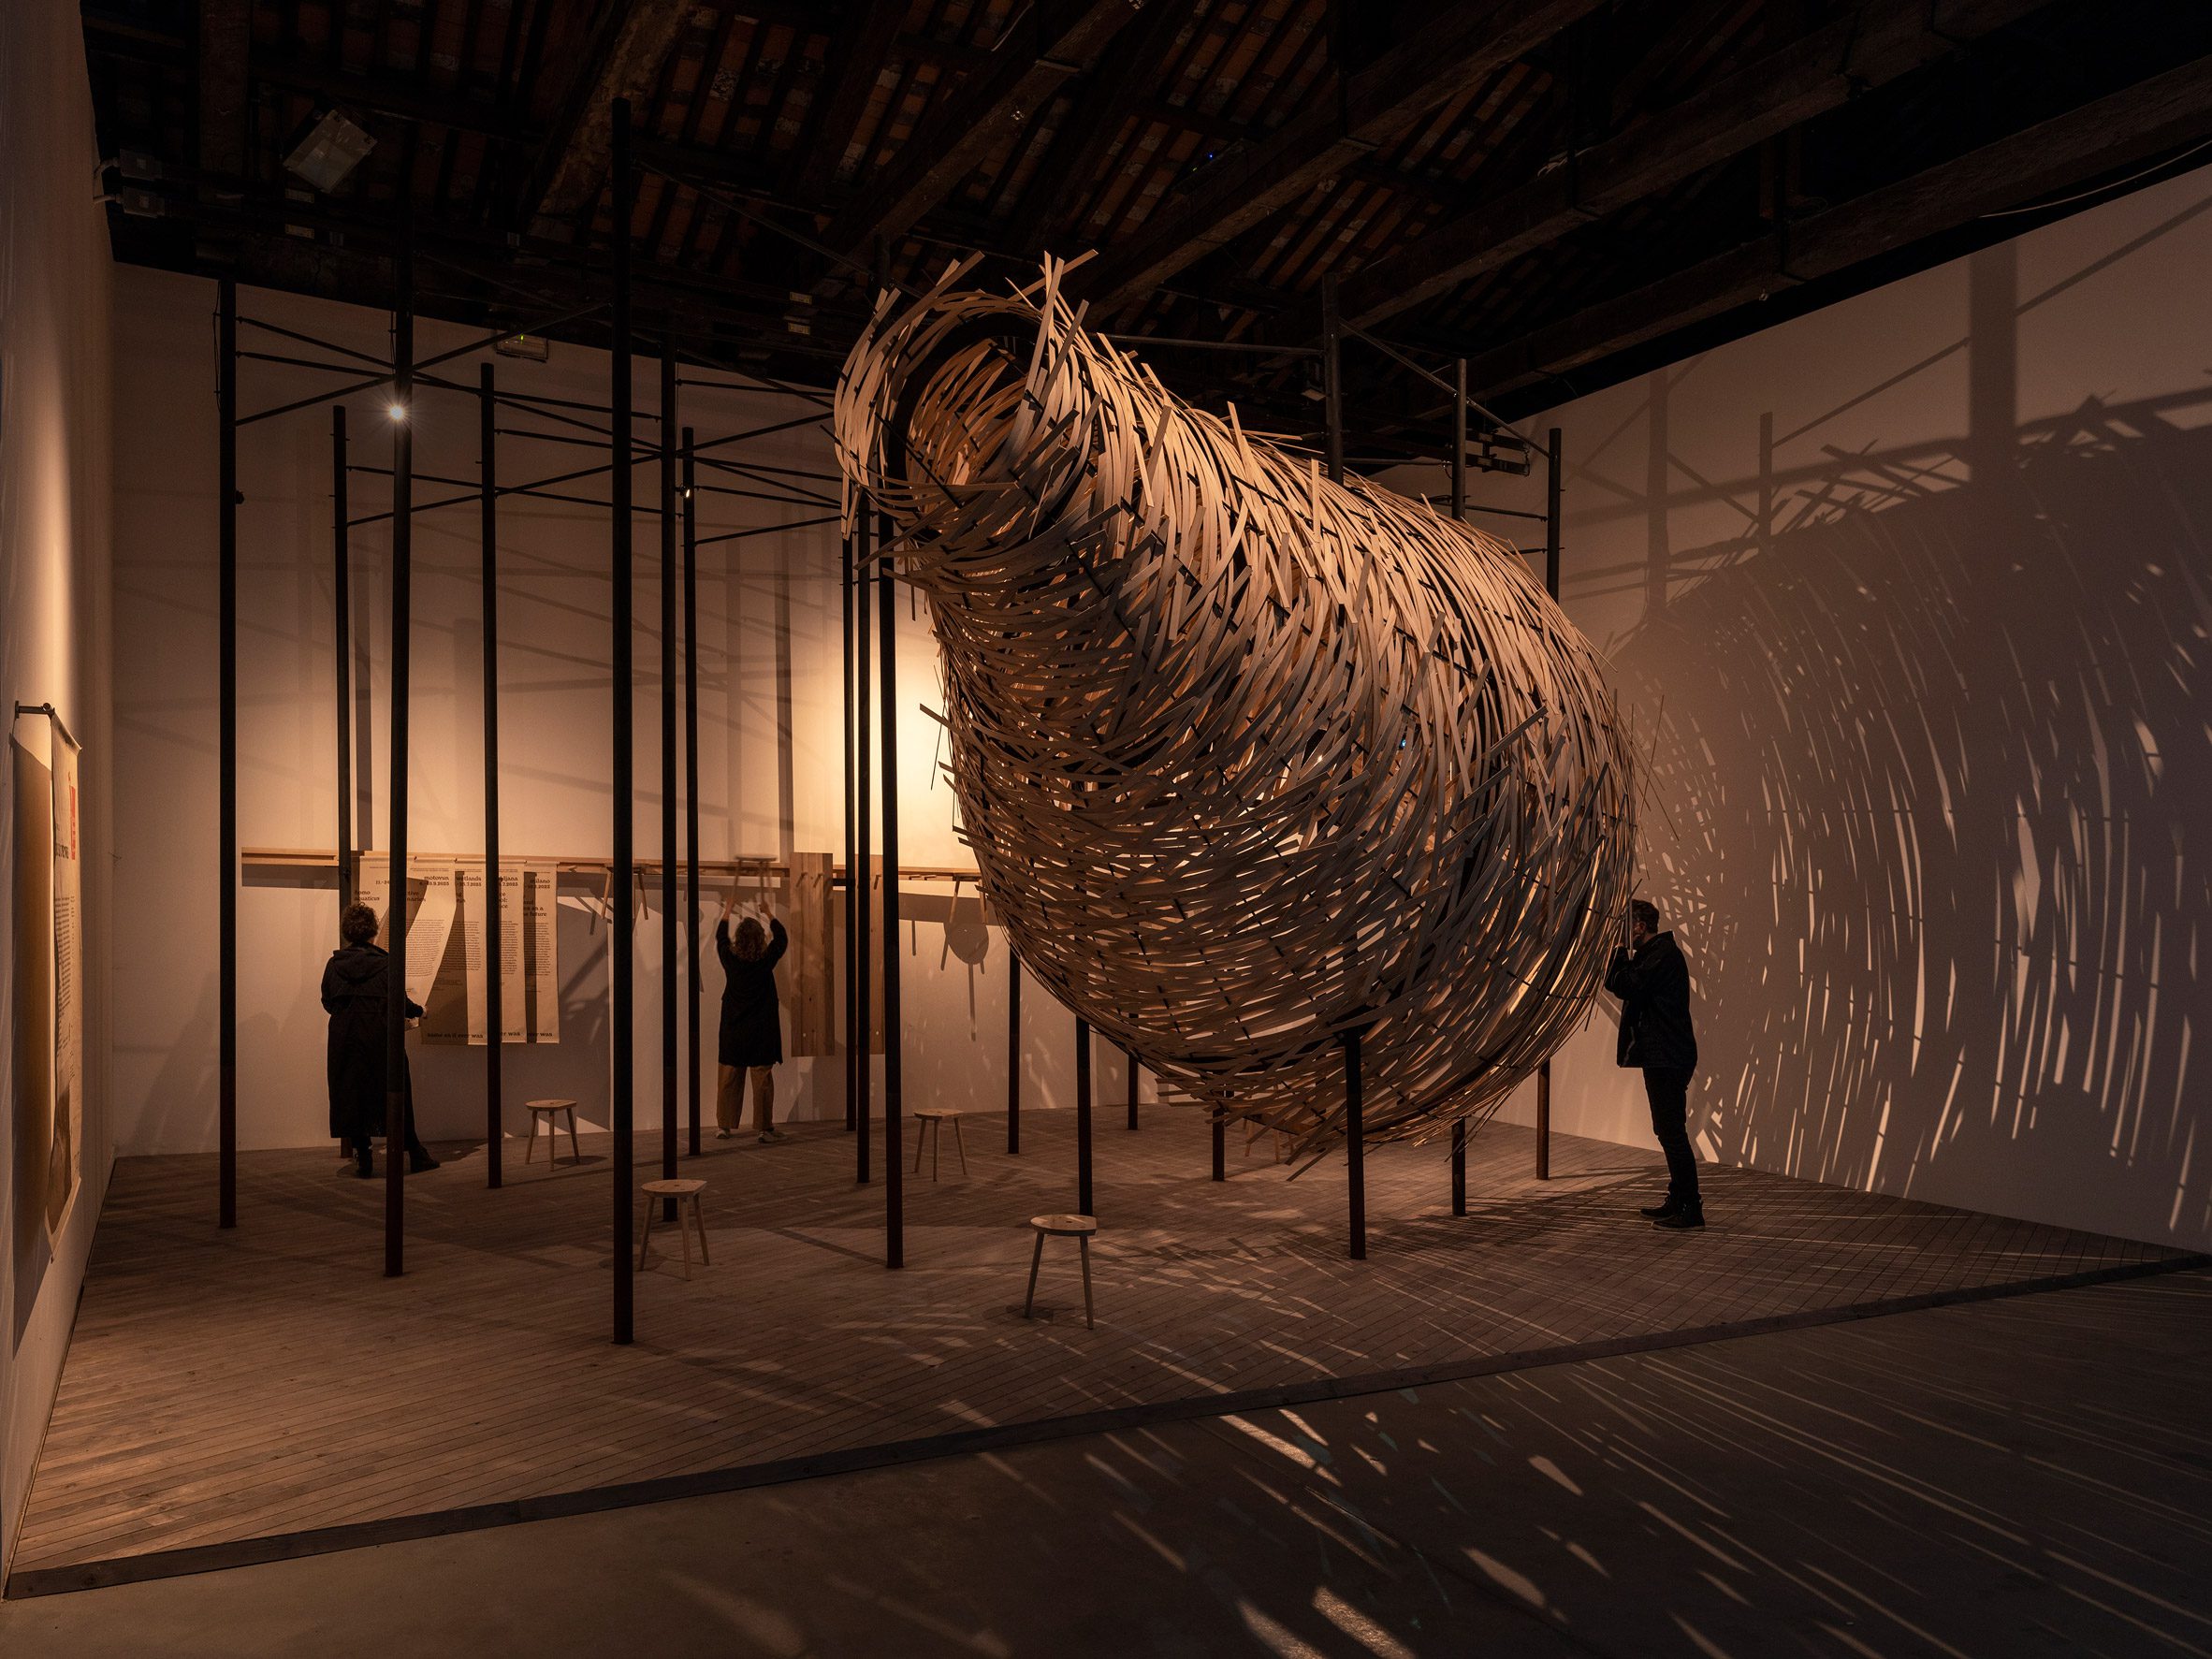 Sculpture in Croatia Pavilion at Venice Architecture Biennale